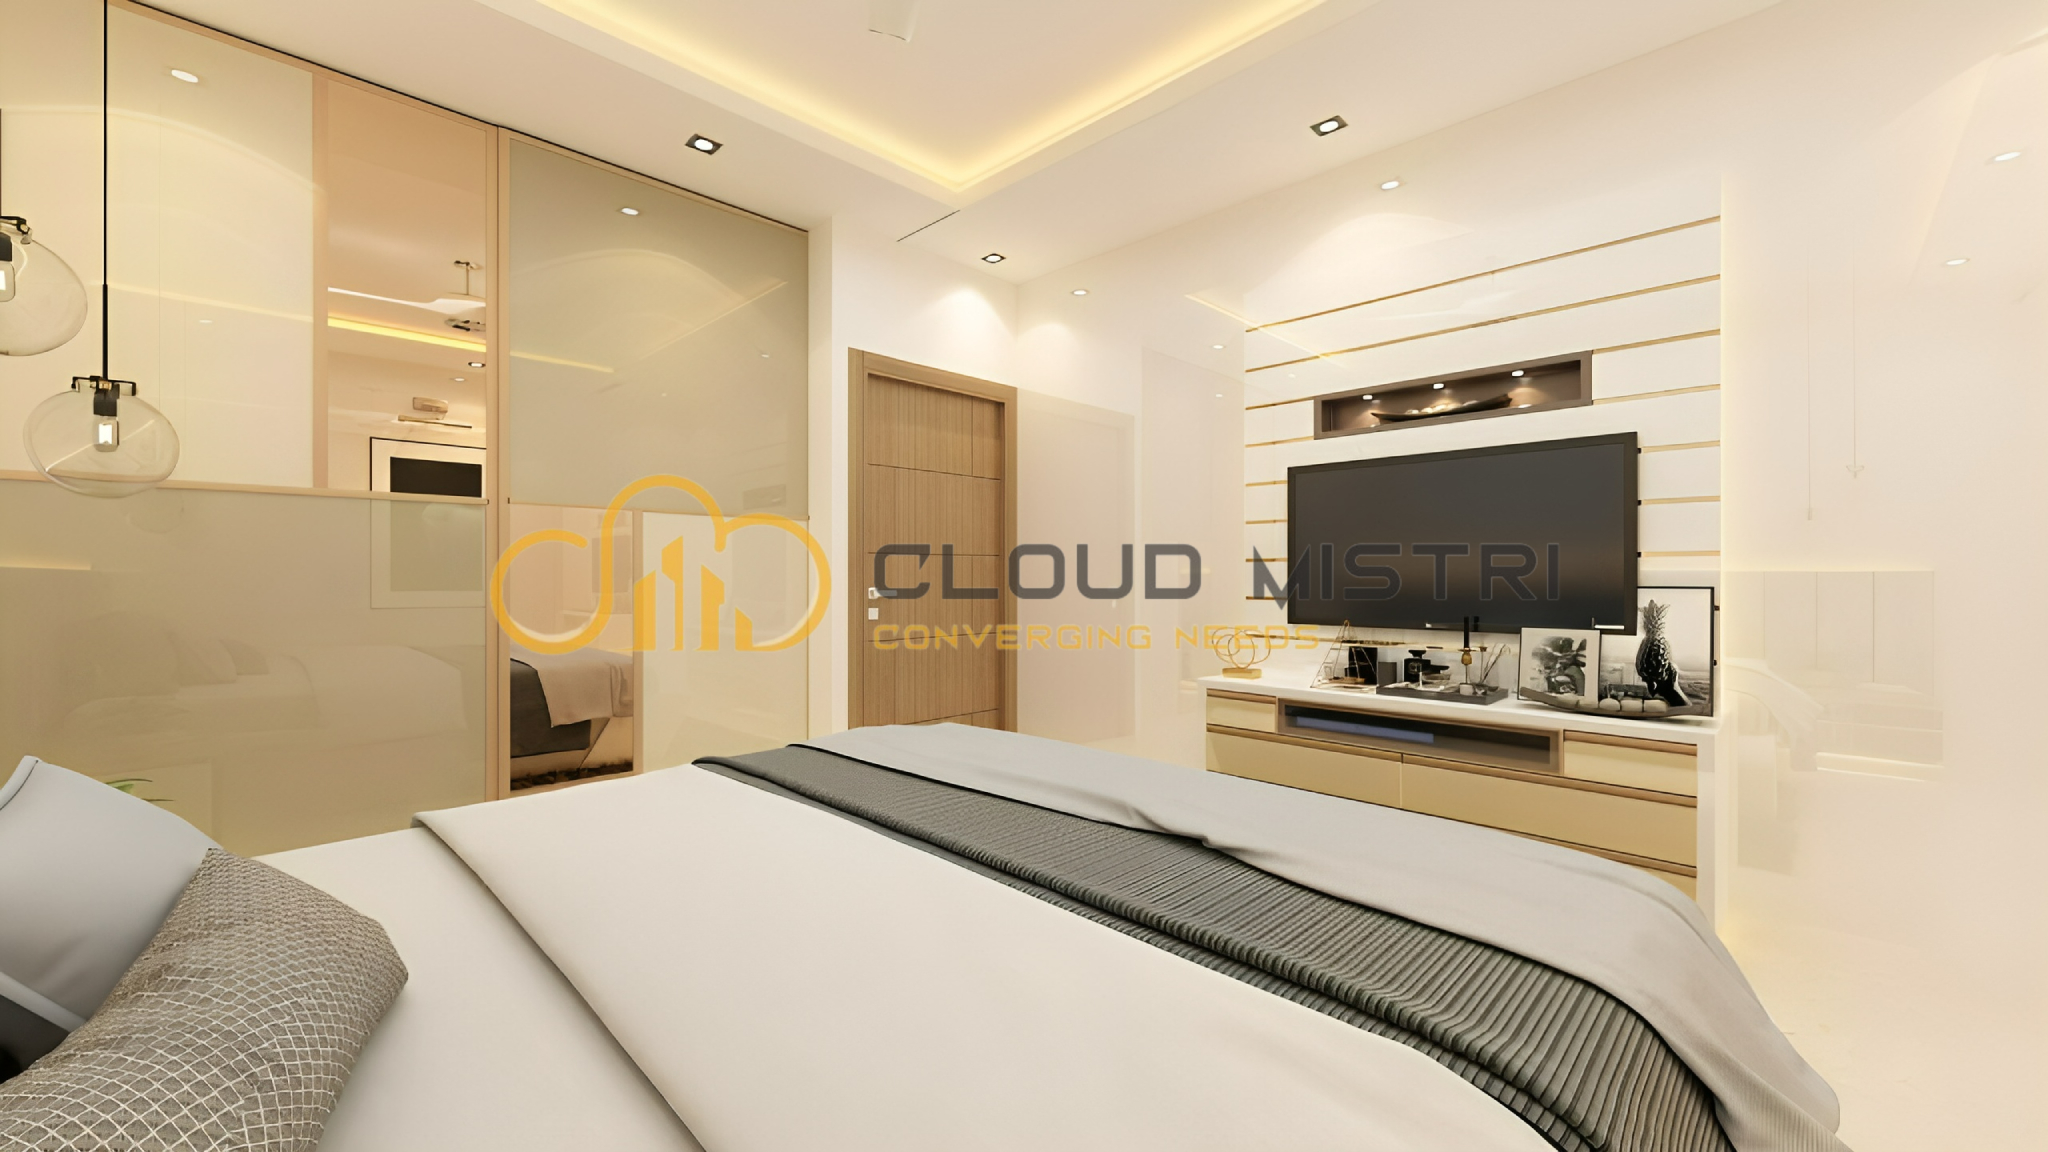 gallery cloudmistri interior design5